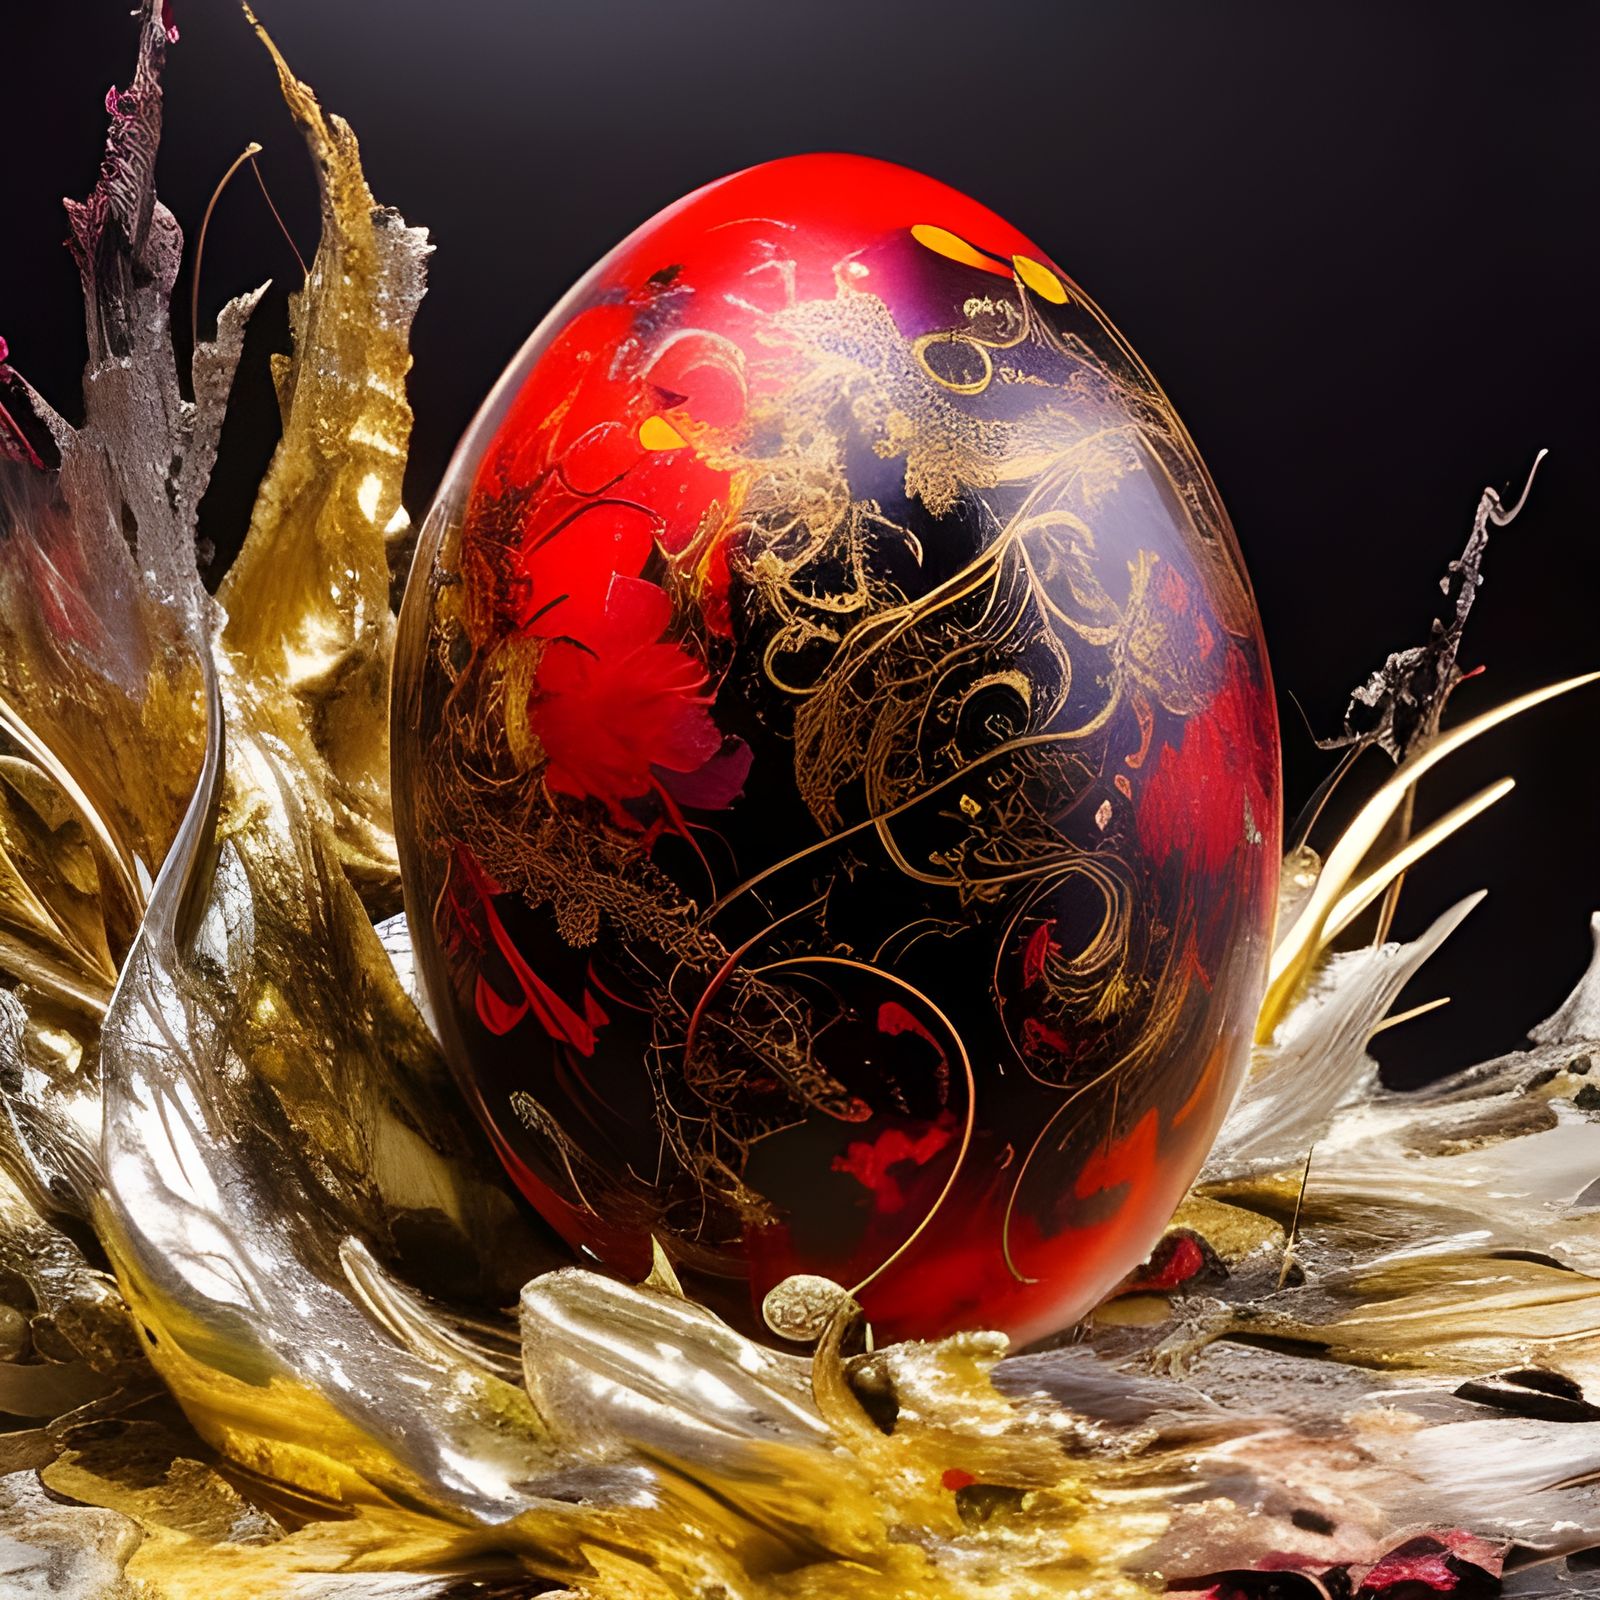 “The Emperor’s Egg” 